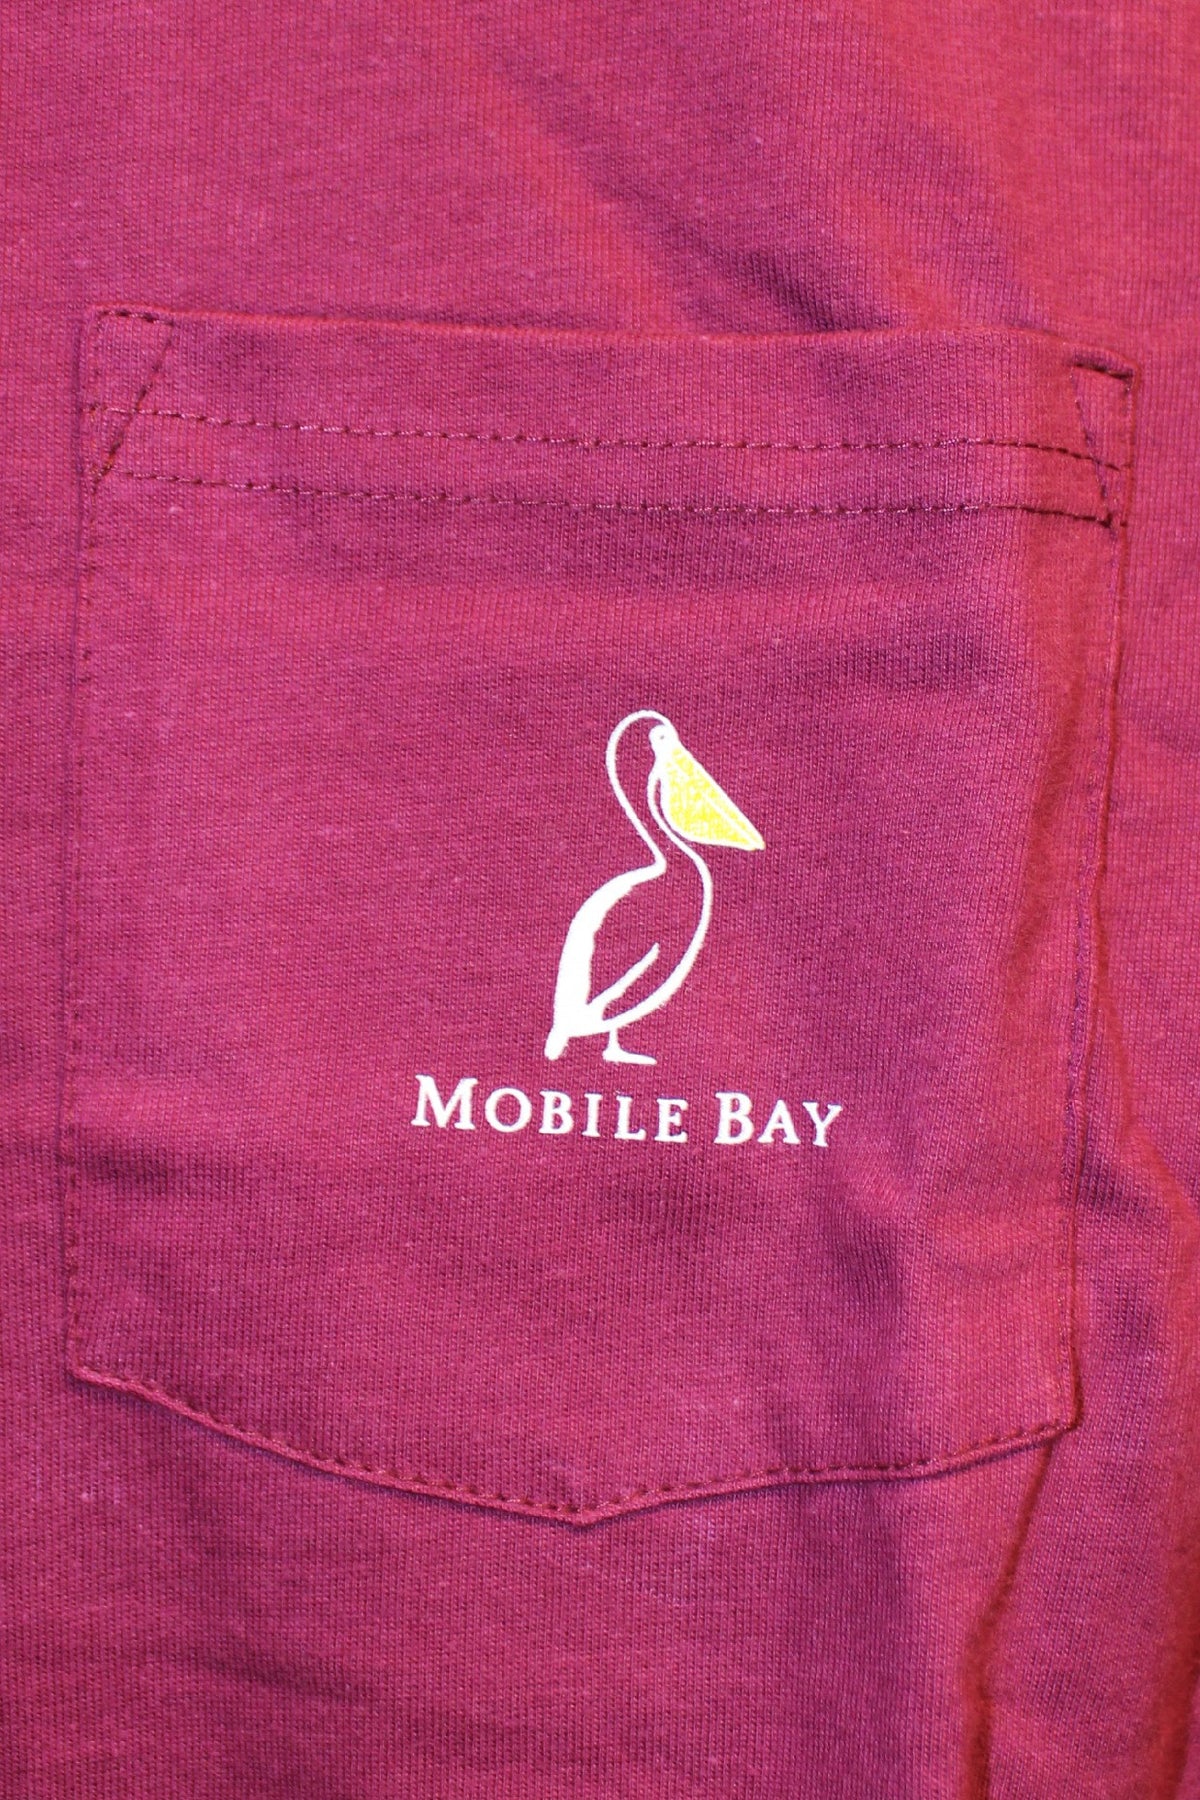 Mobile Bay: Morning Boats Long Sleeve Tee, Burgundy